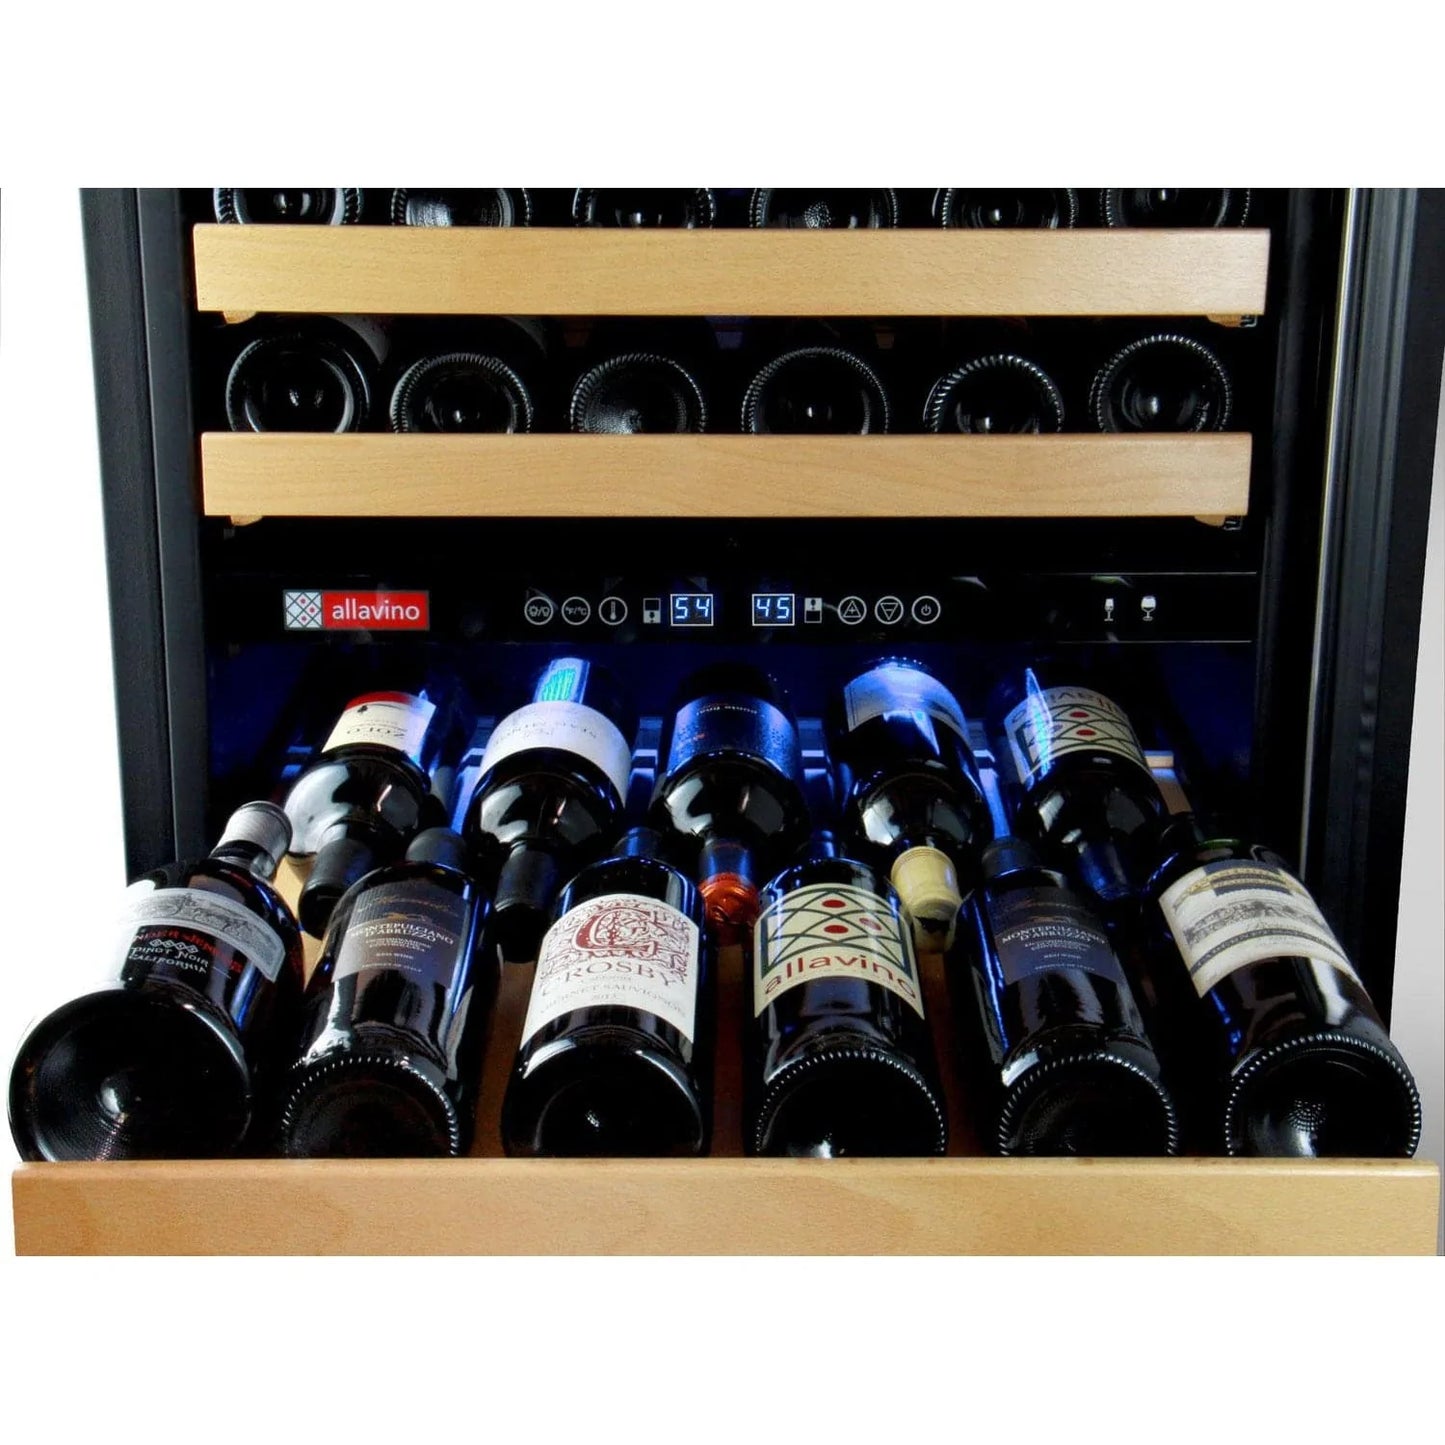 Allavino 24" 174 Bottle Single Zone Wine Refrigerator - YHWR174-1SR20